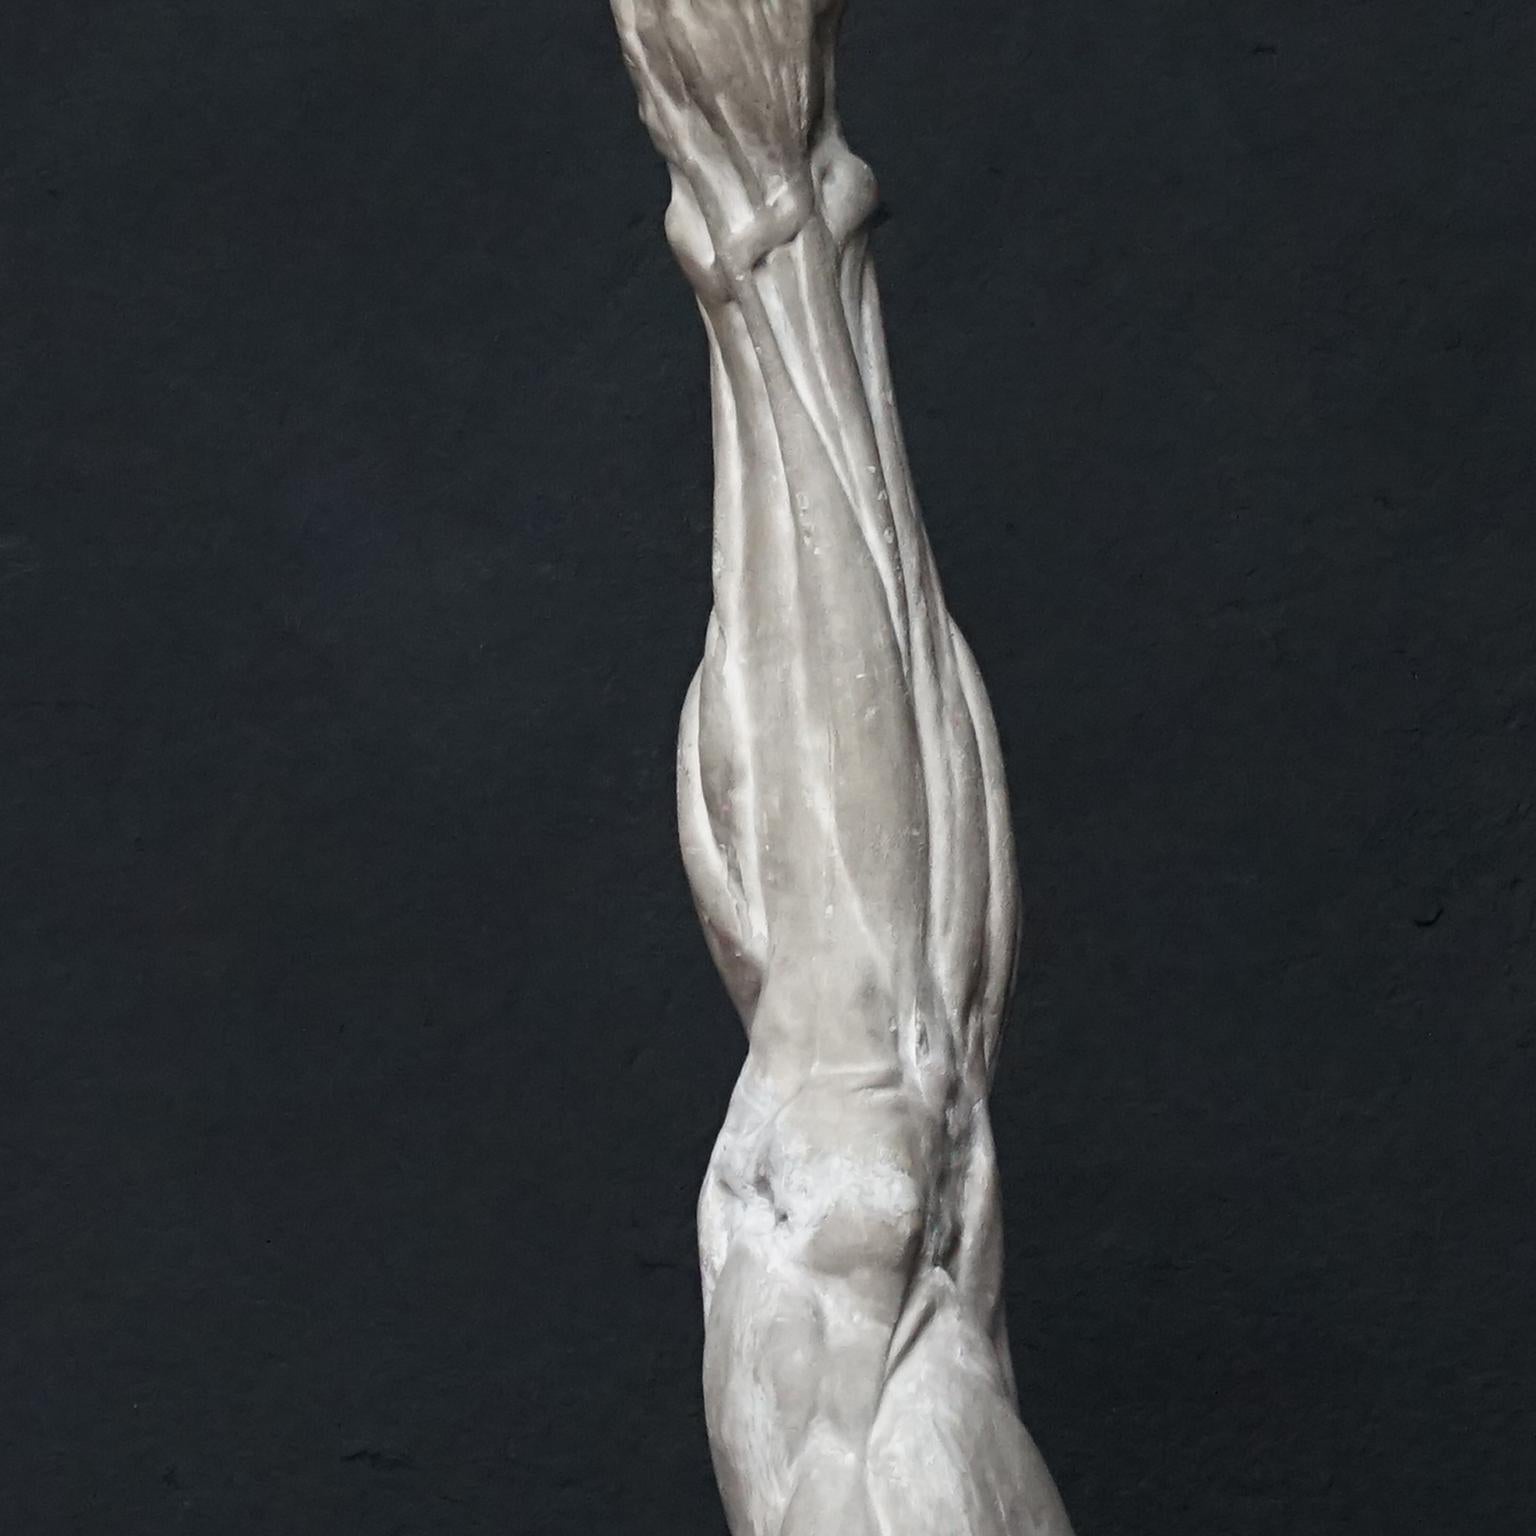 19th Century Plaster Muscle Study of Human Leg from the Rijksacademie, Amsterdam 6